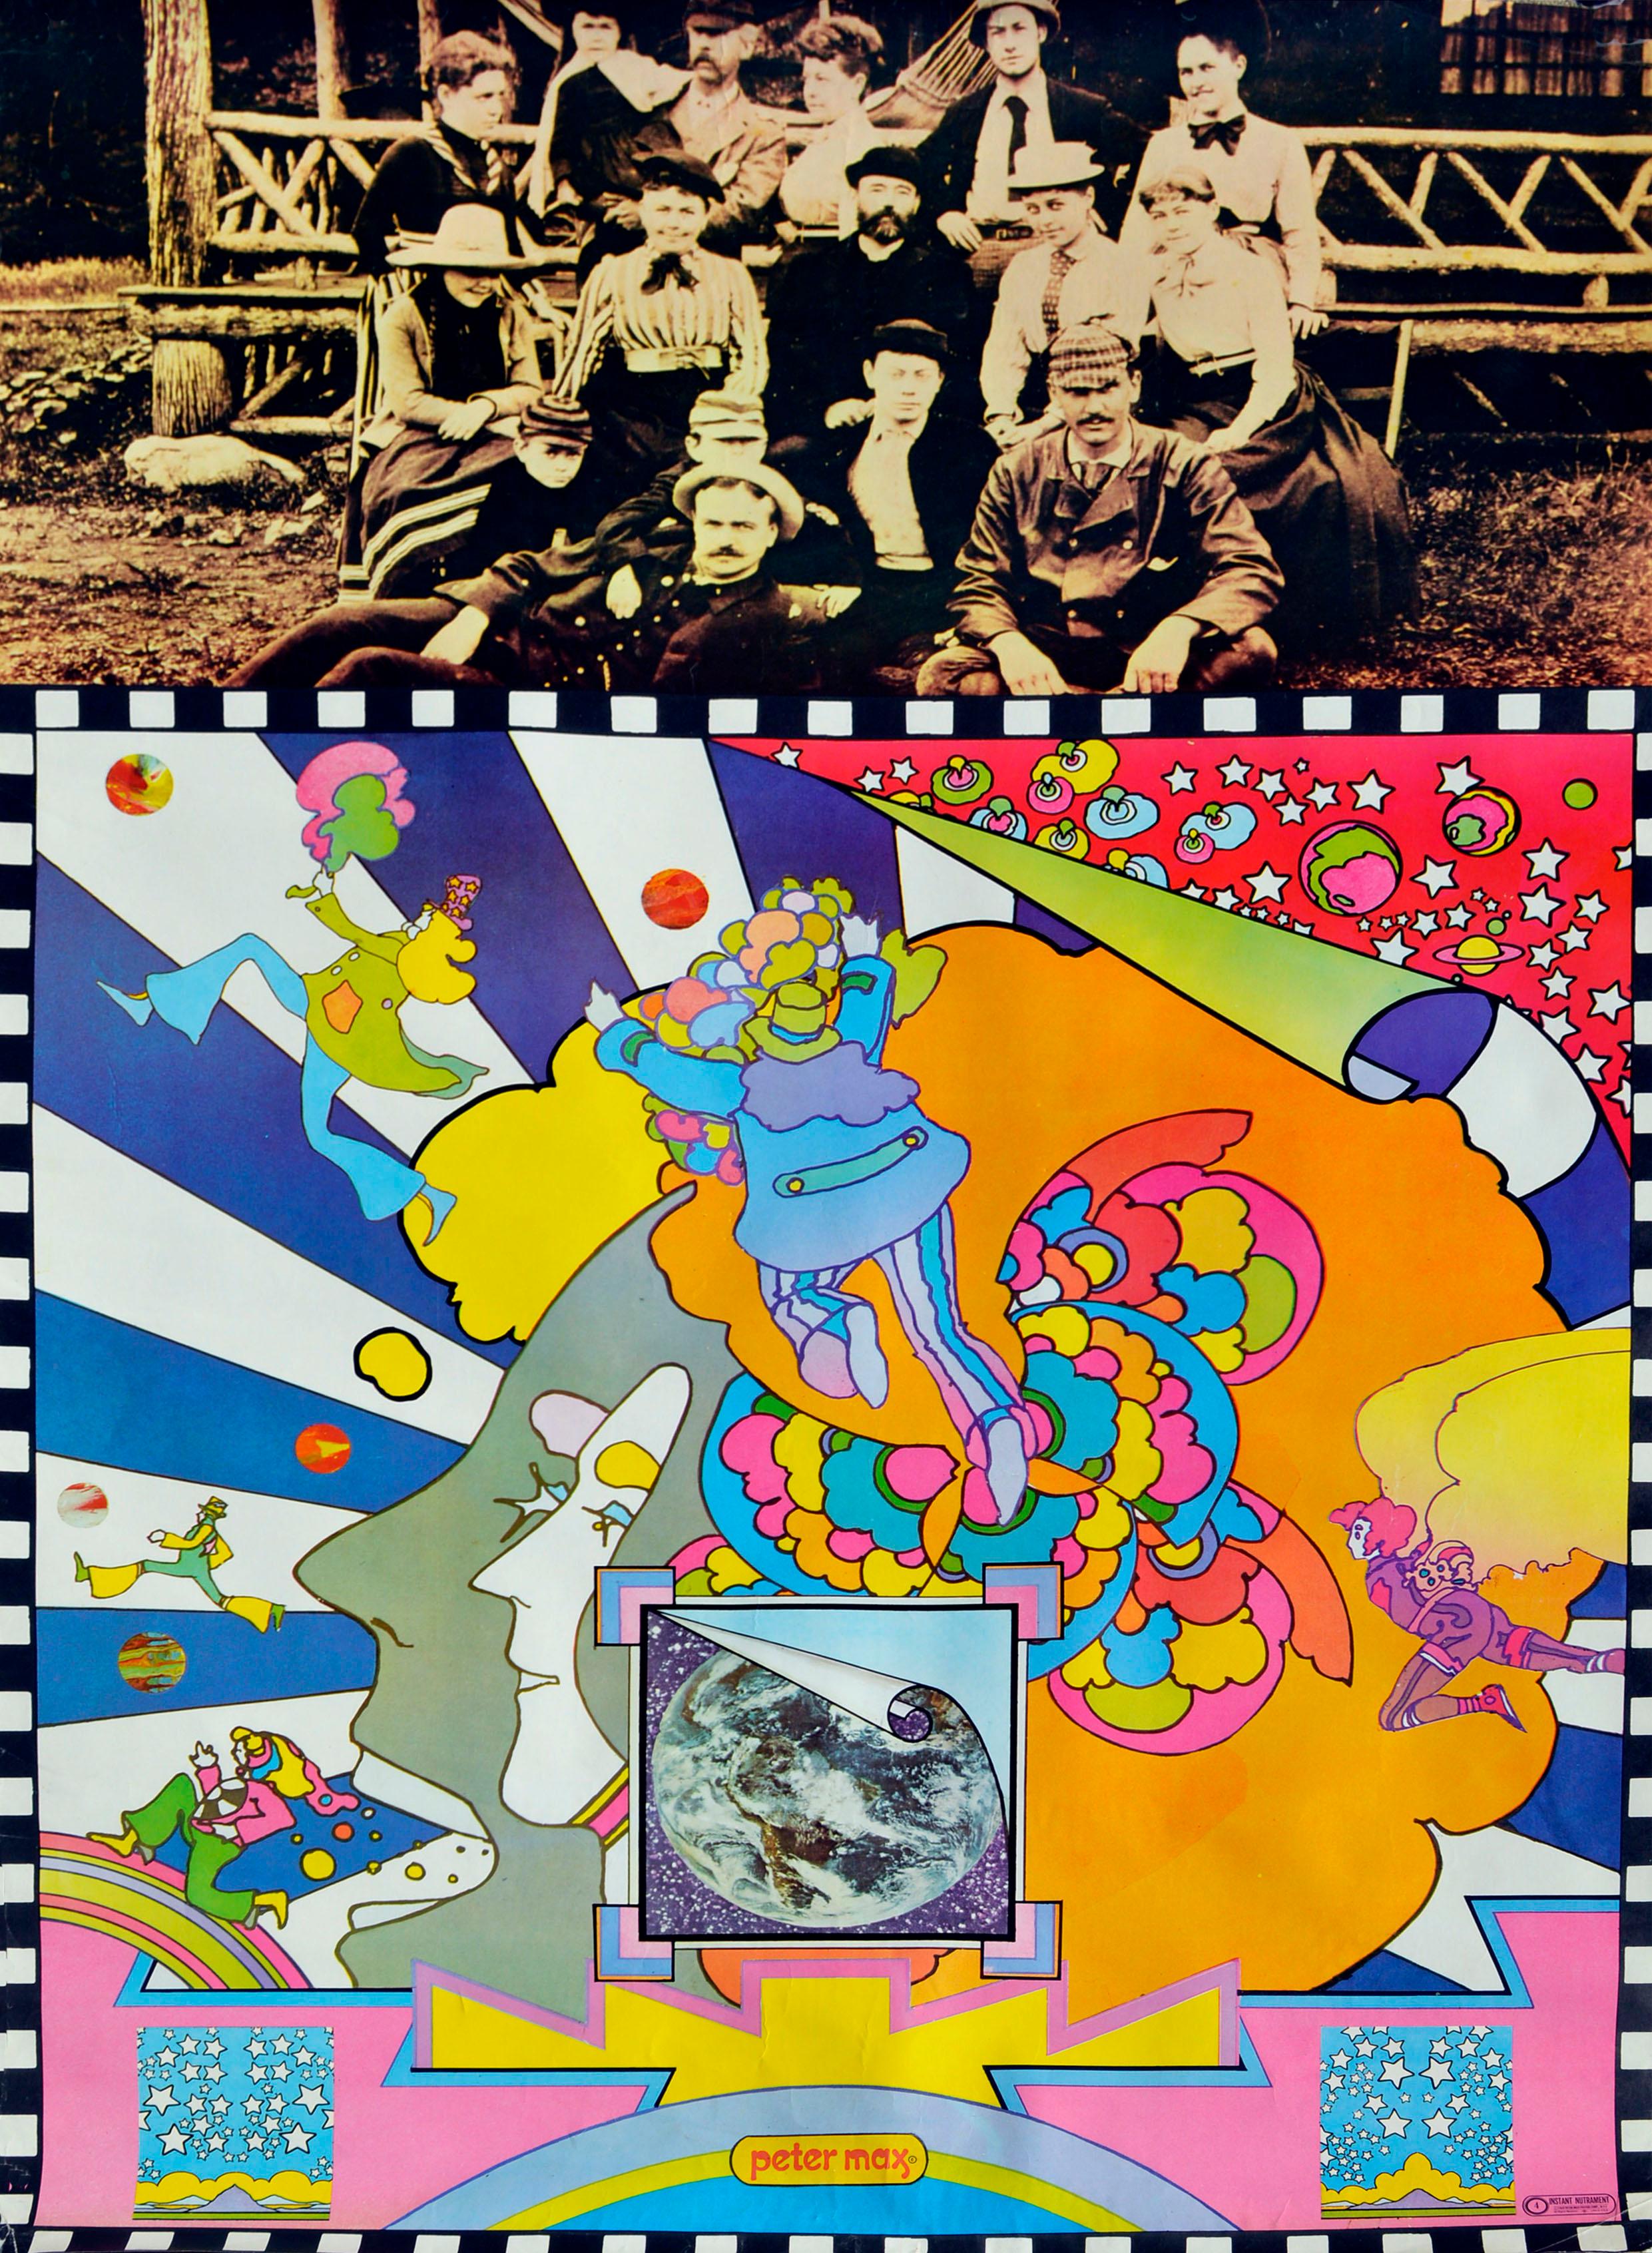 Instant Nutriment #4, 1969 - Modern Pop Art Psychedelic Print